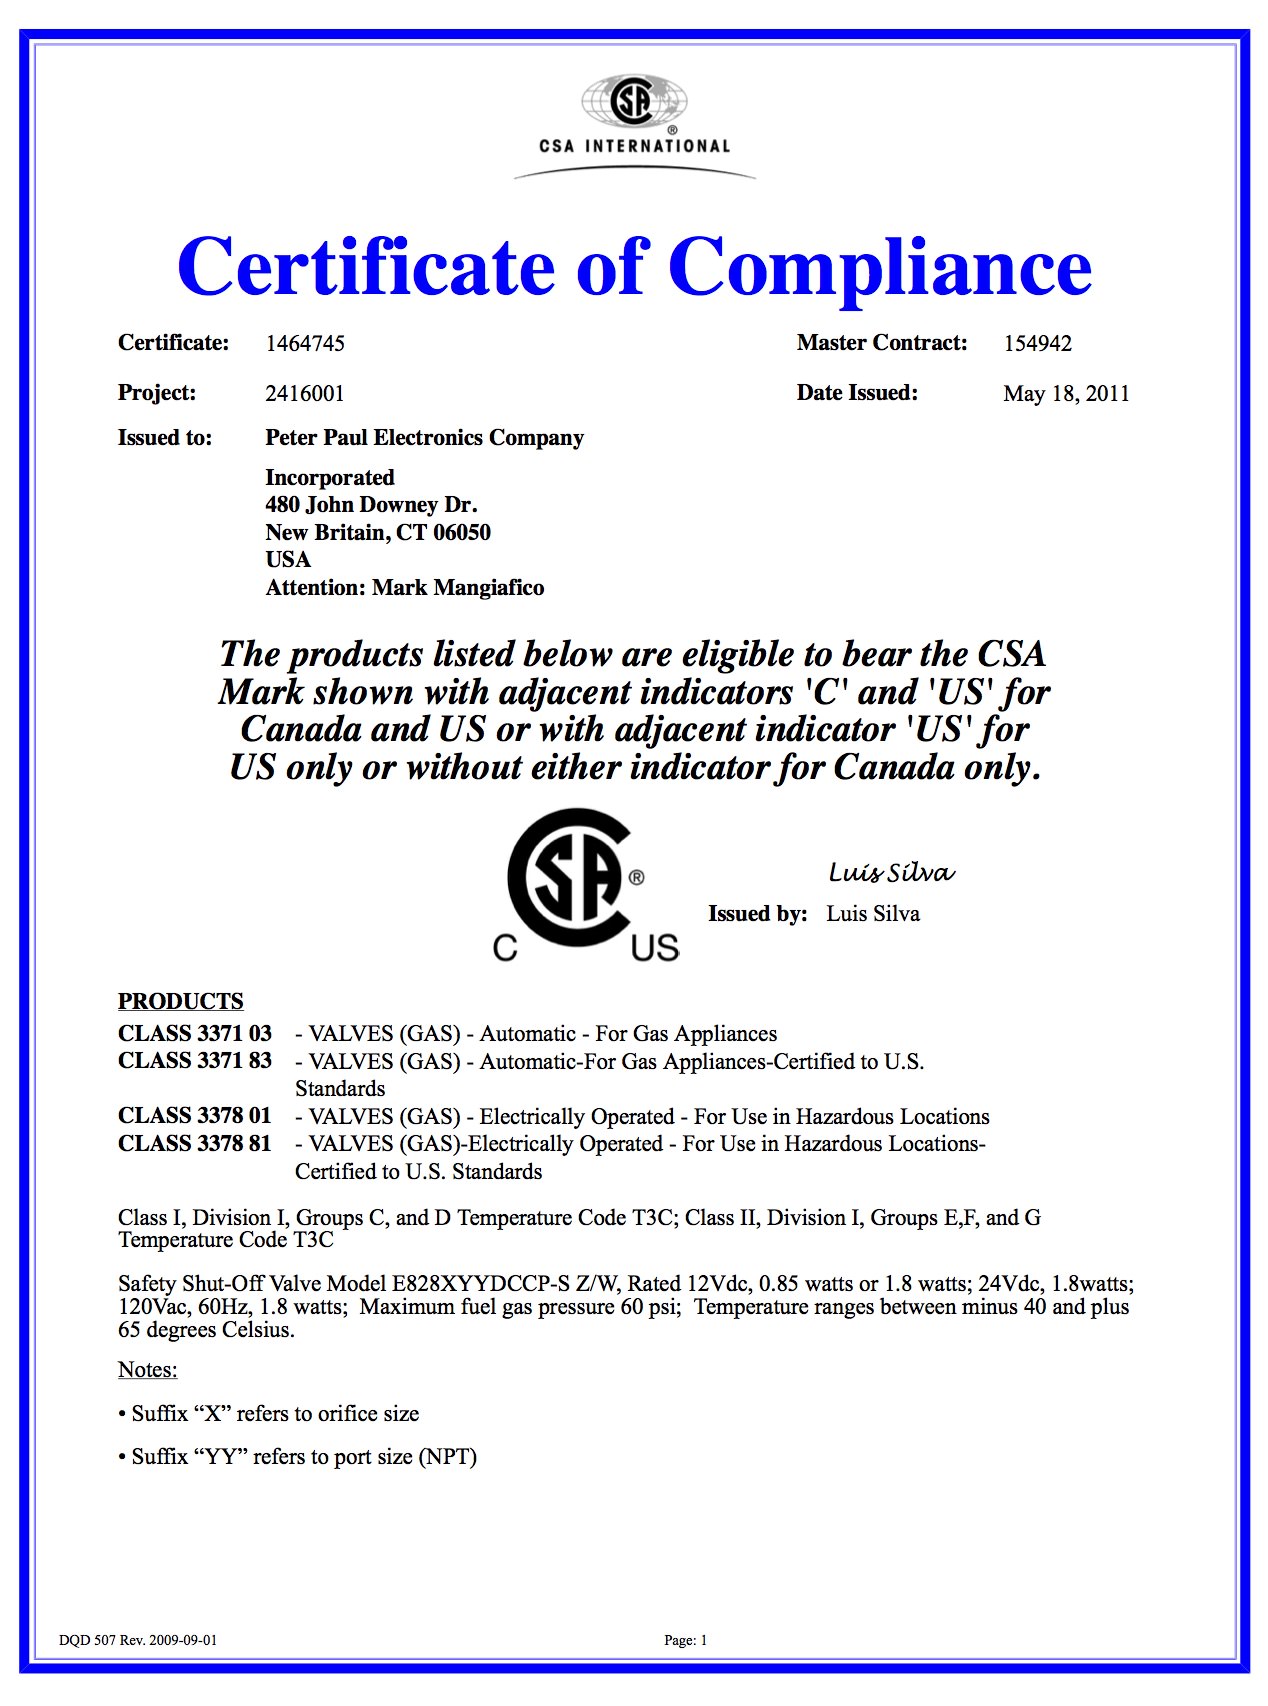 CSA Certification for CI Solenoid Valves used in Hazardous Locations